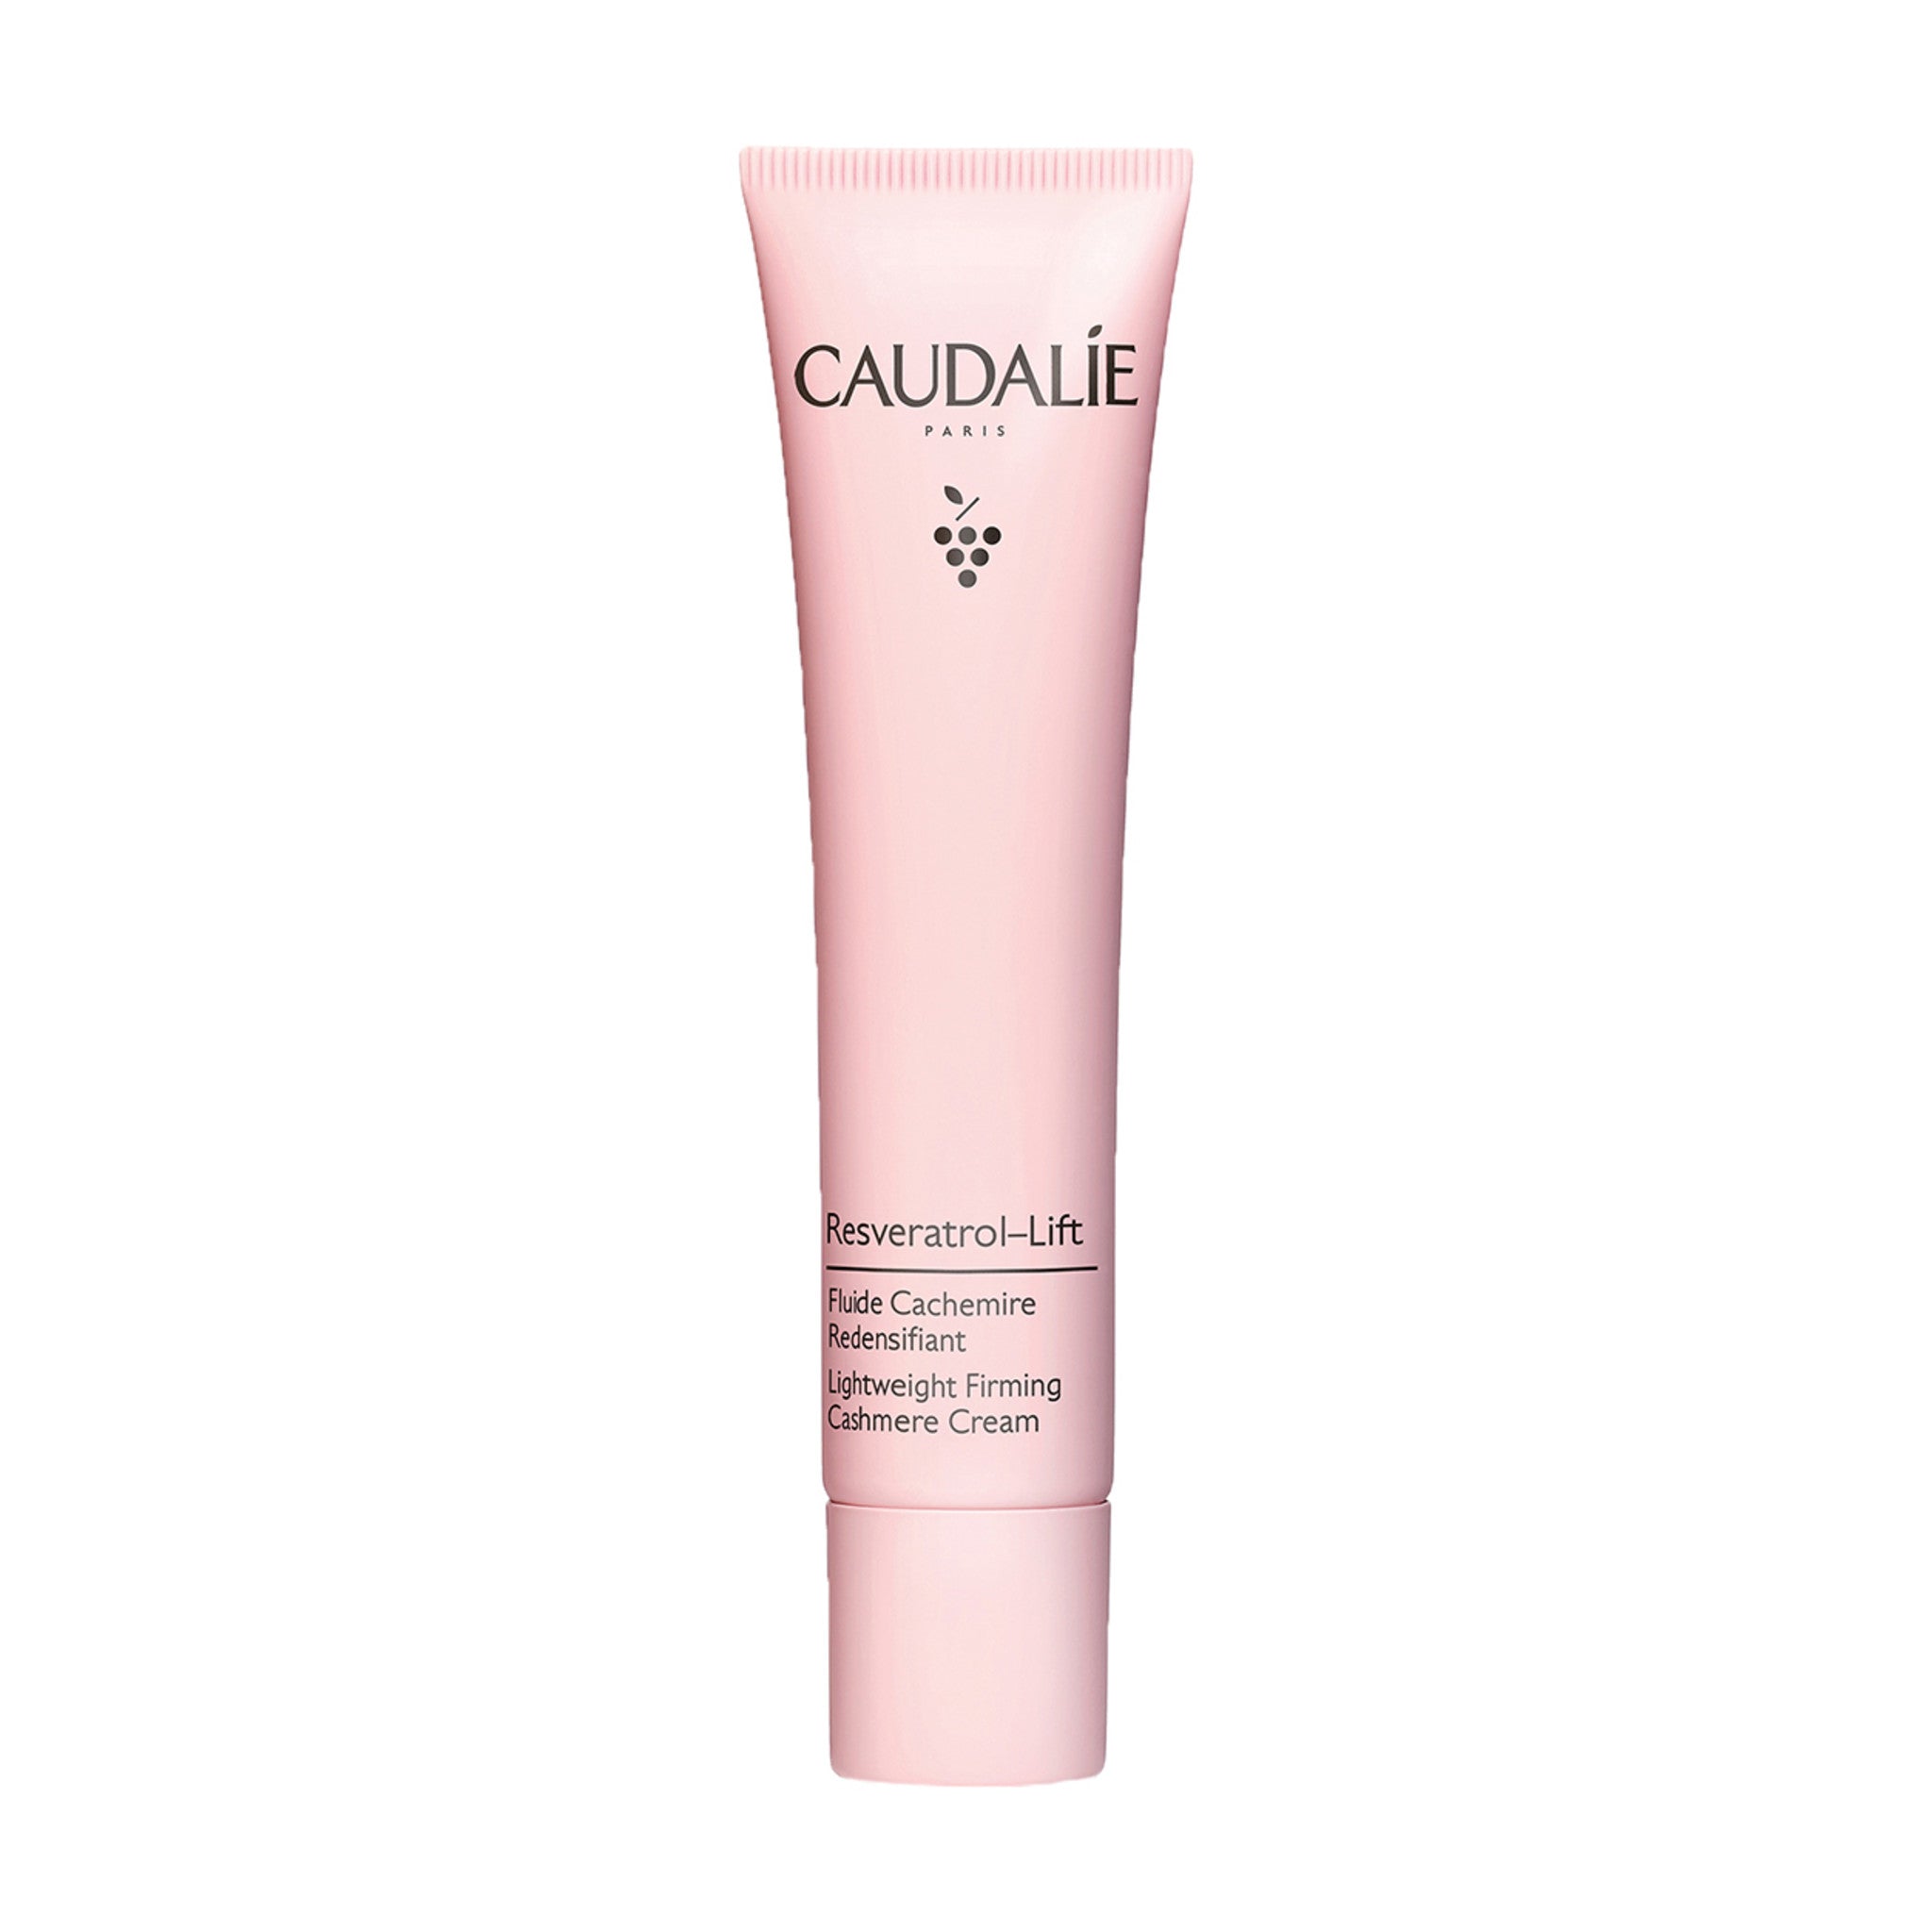 Caudalie Resveratrol-Lift Lightweight Firming Cashmere Cream main image.